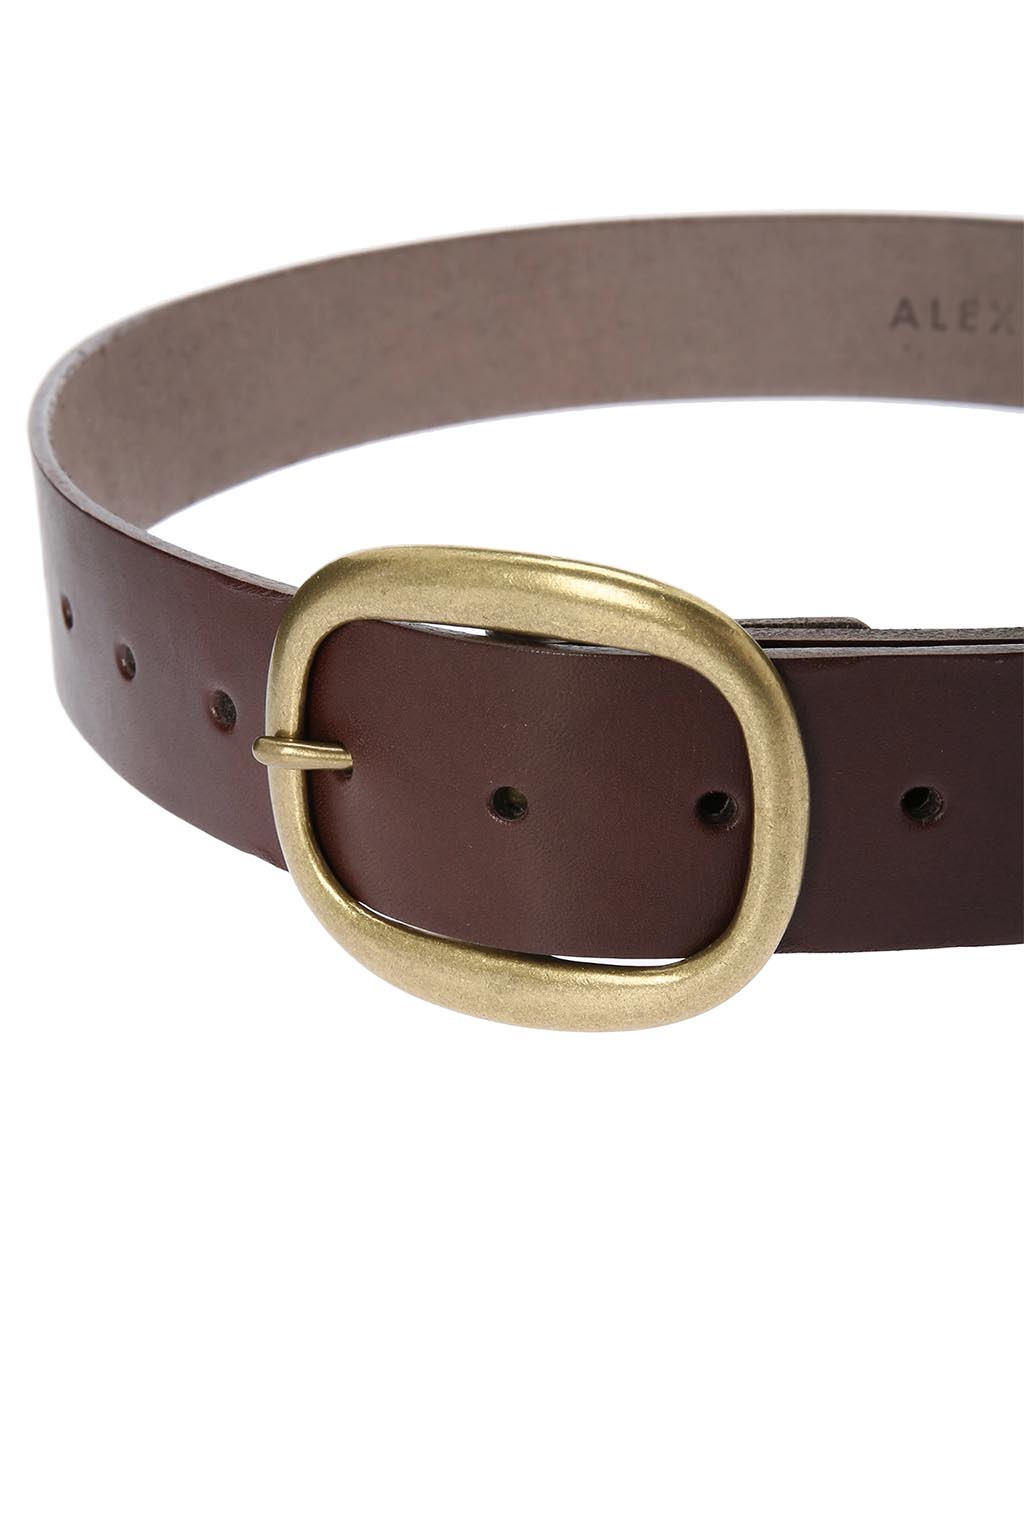 Leather Belt Brown 8